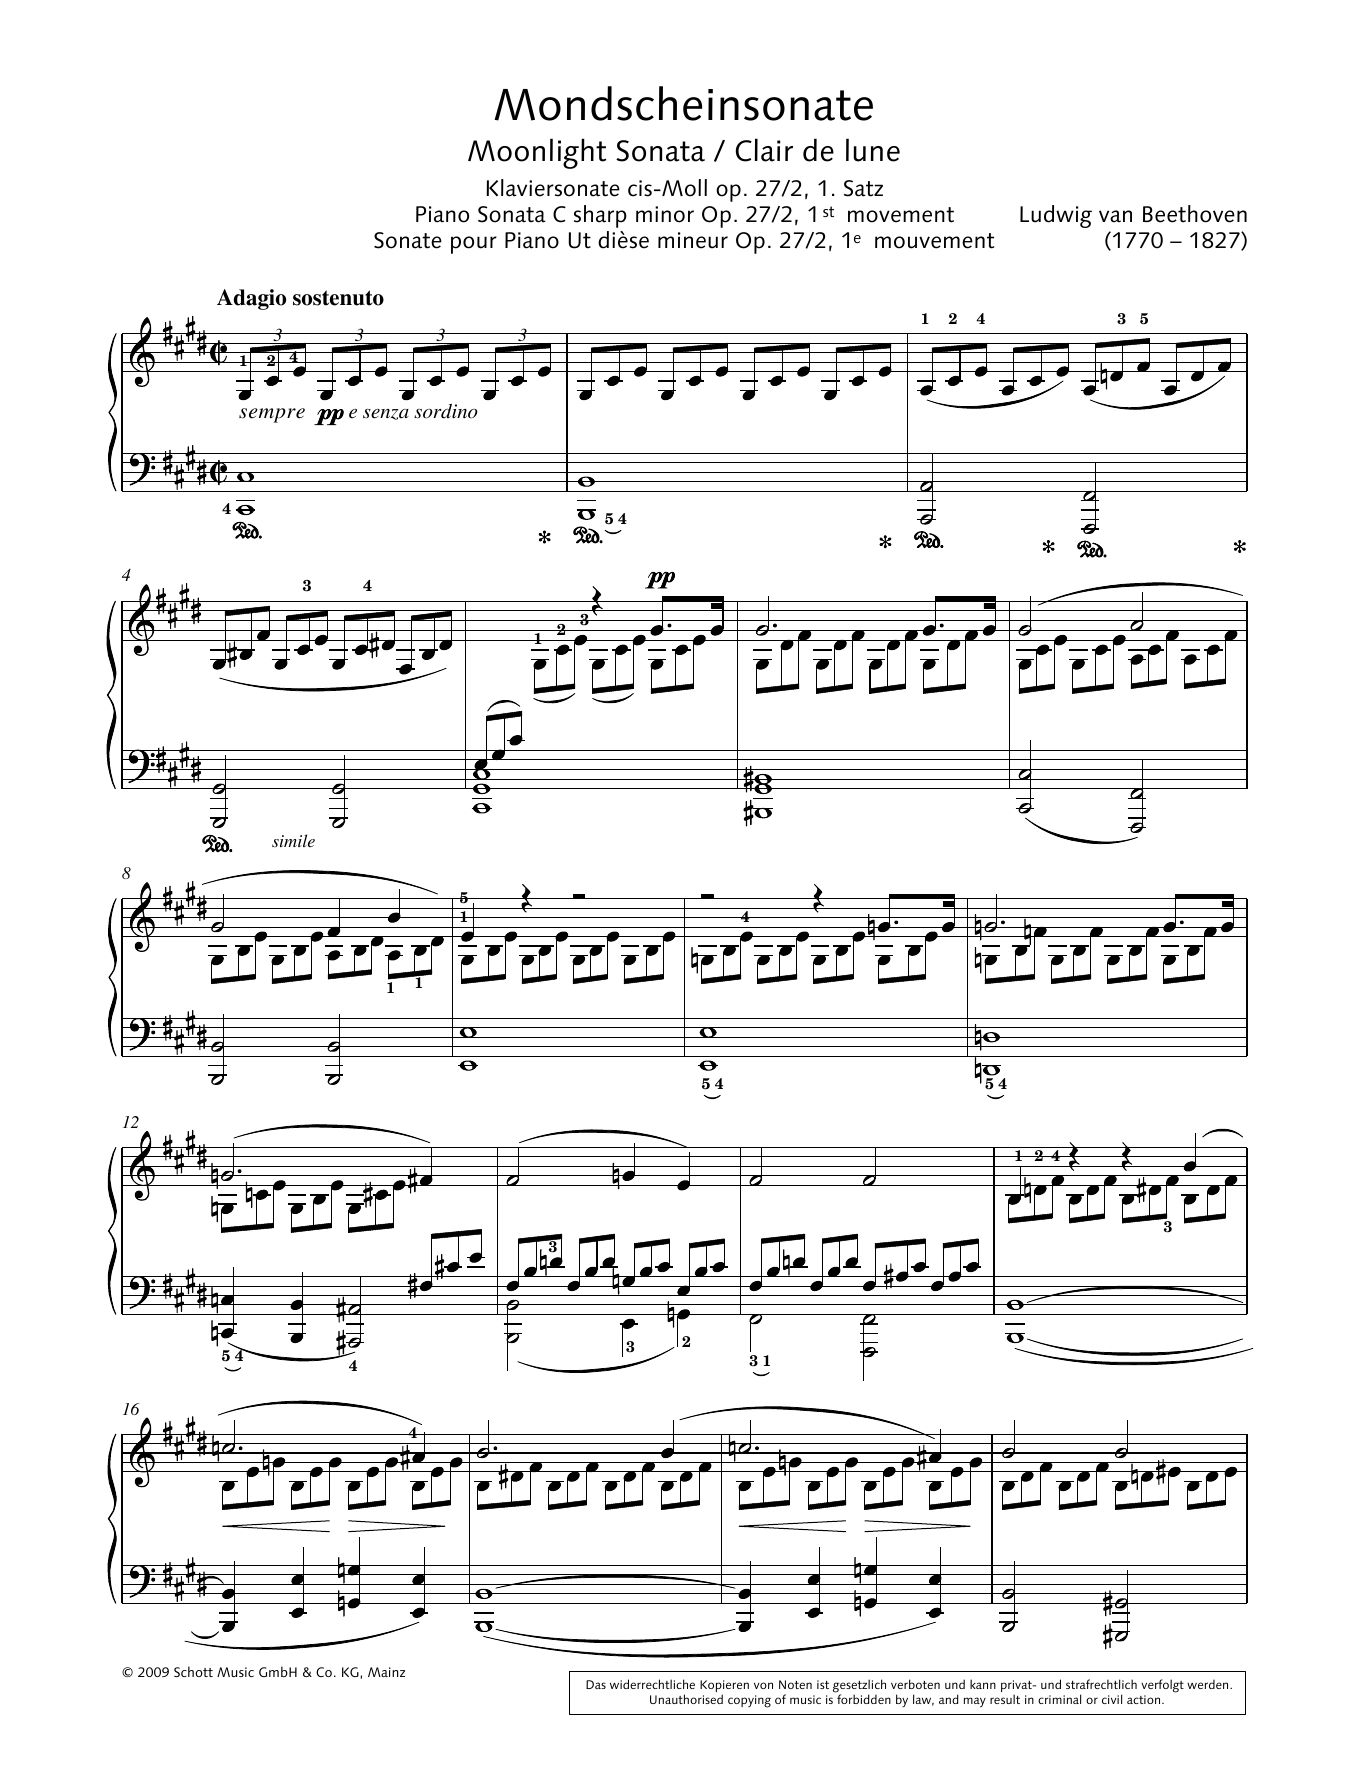 Hans-Gunter Heumann Moonlight Sonata in C-sharp minor Sheet Music Notes & Chords for Piano Solo - Download or Print PDF